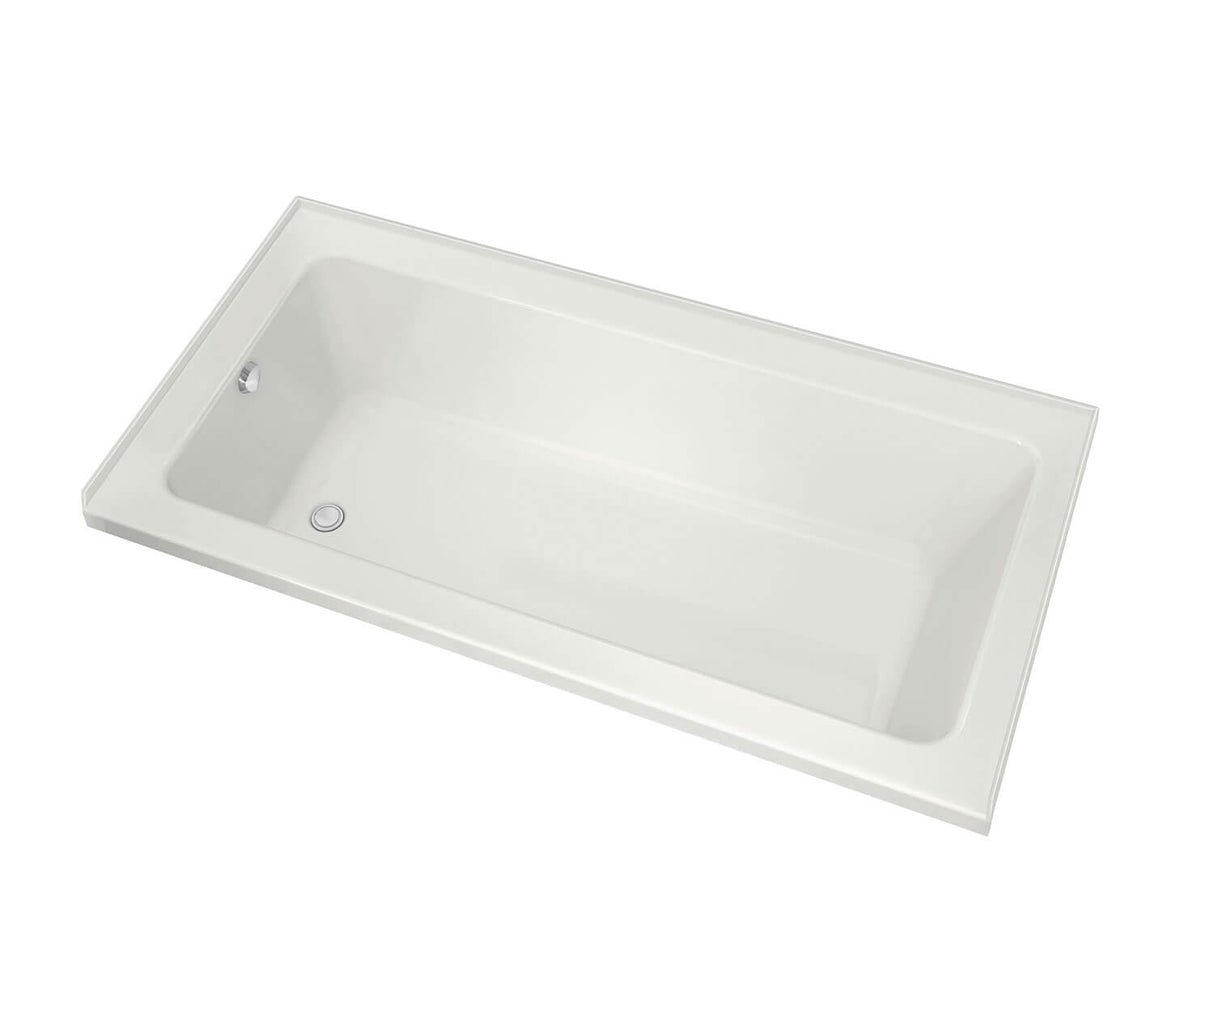 MAAX 106198-R-097-001 Pose 6030 IF Acrylic Alcove Right-Hand Drain Combined Whirlpool & Aeroeffect Bathtub in White